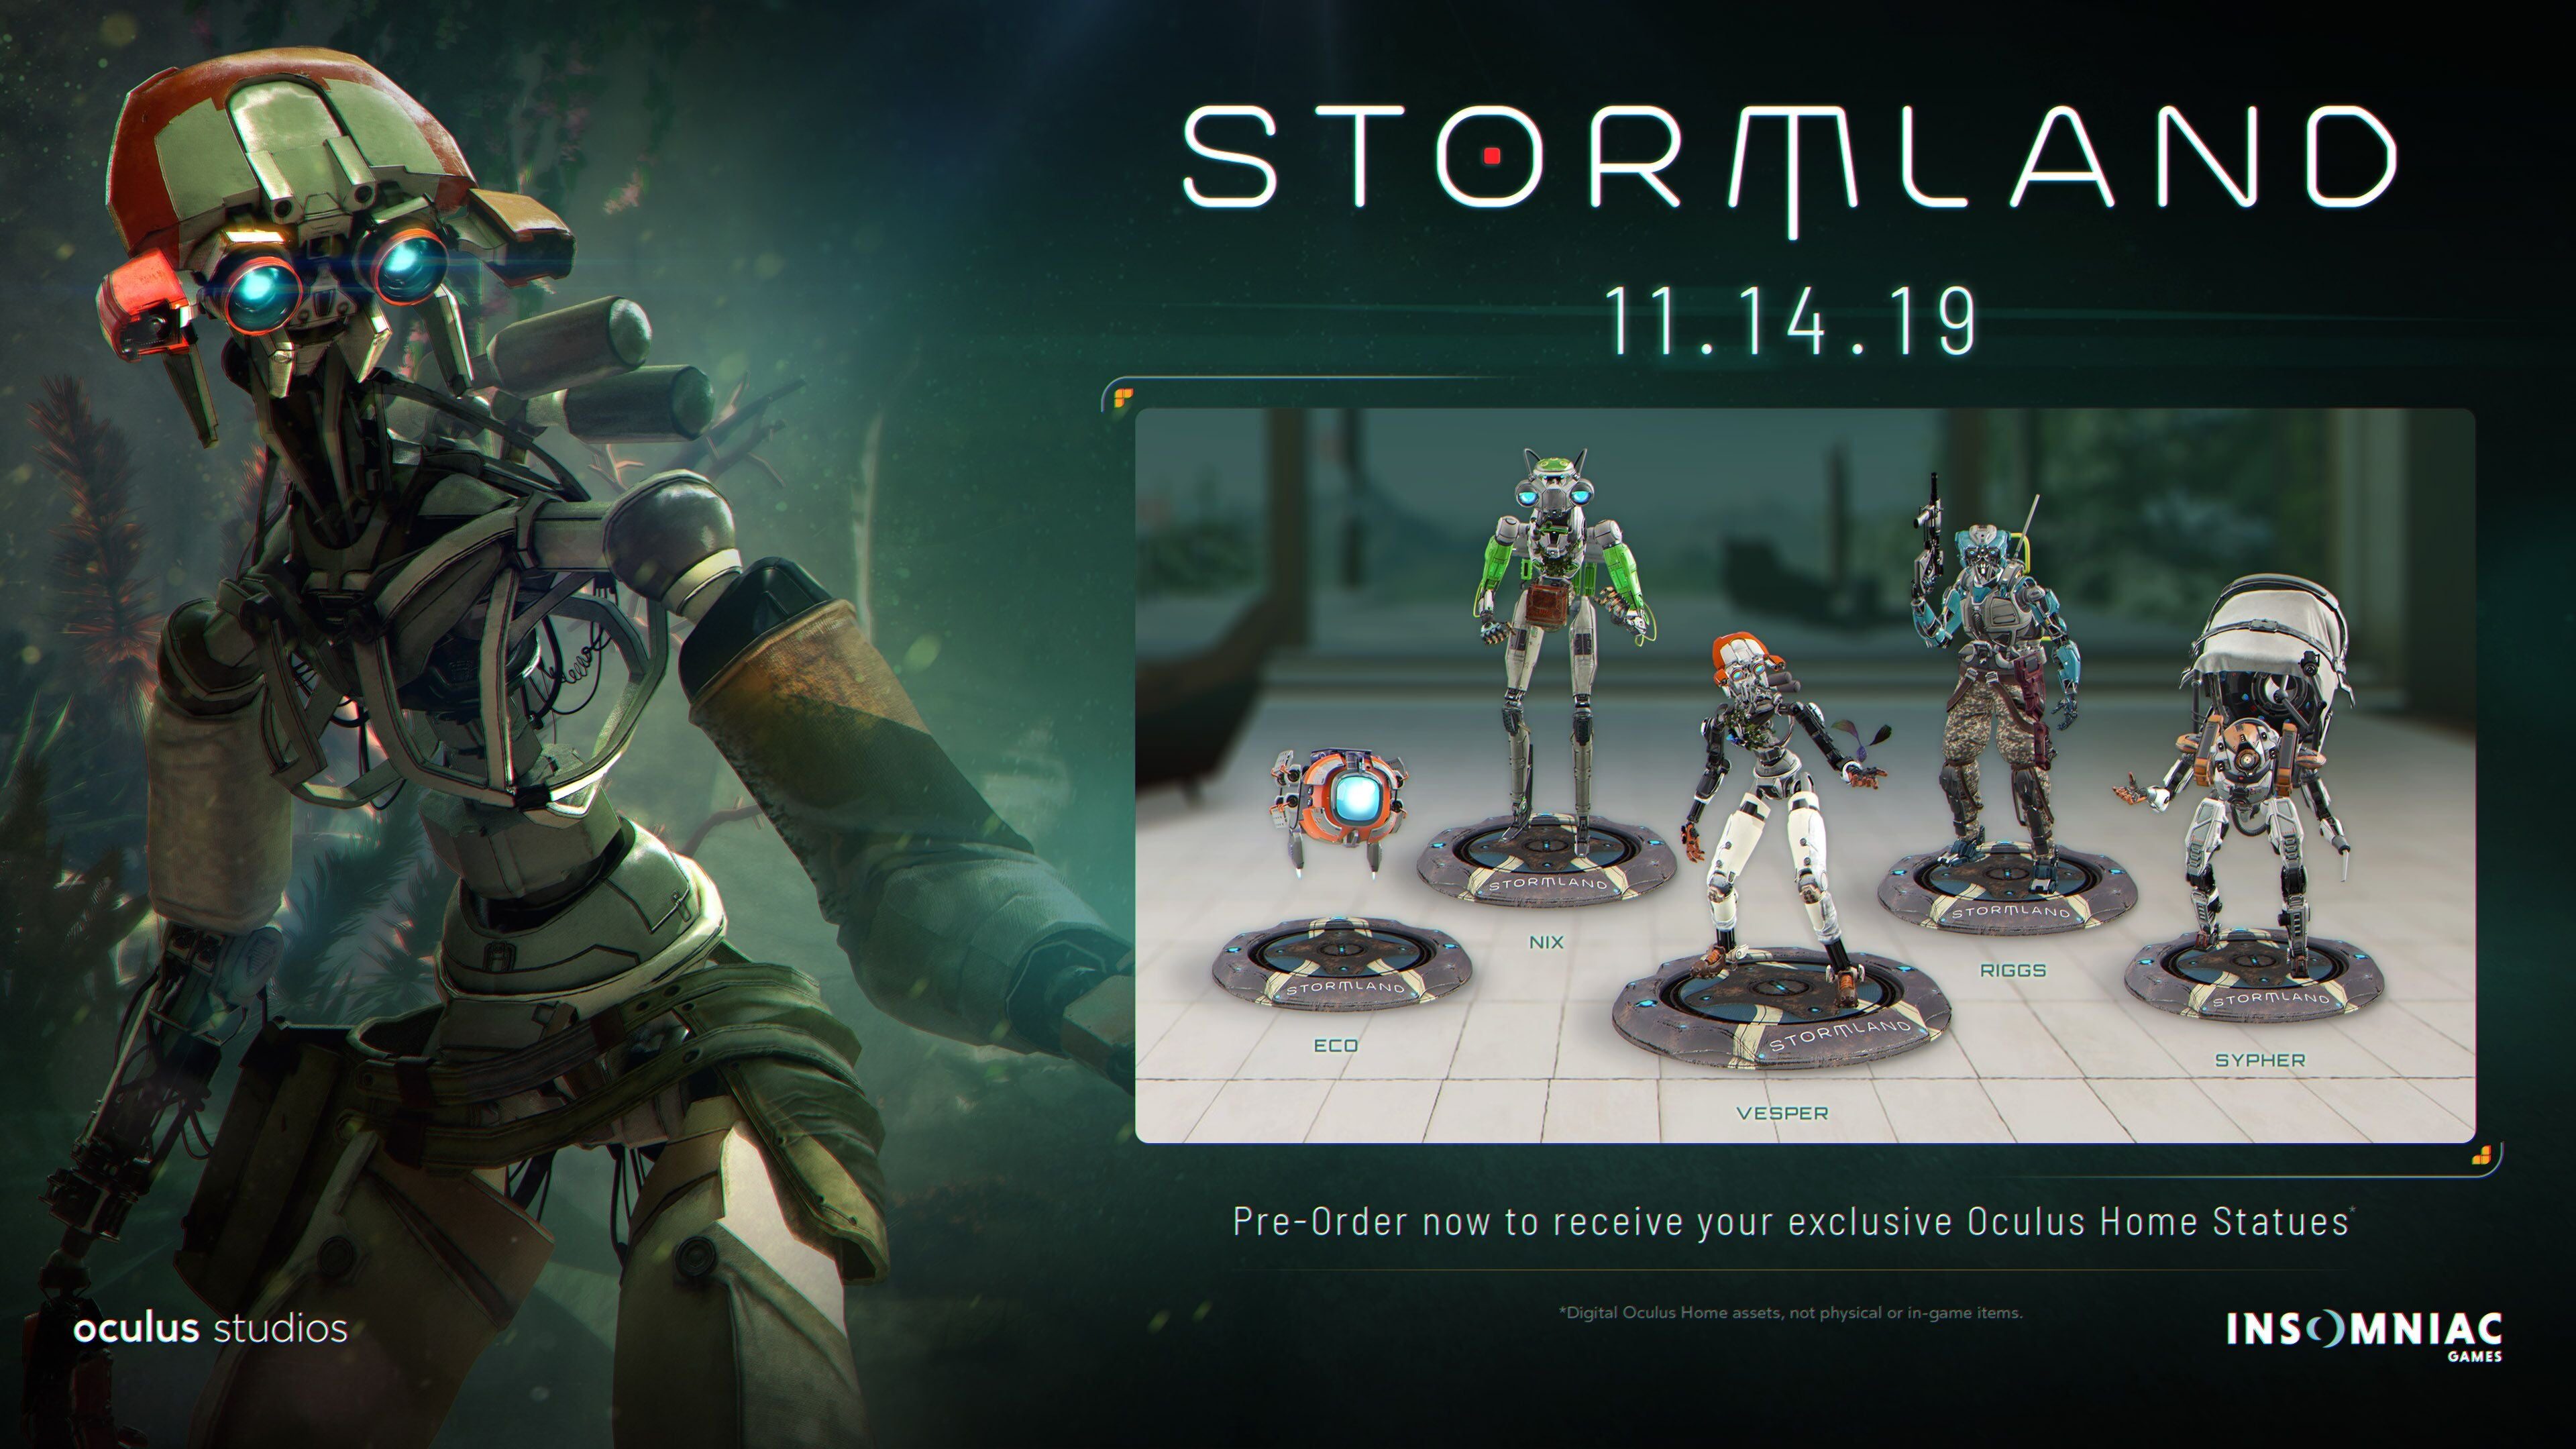 Digital Statues as Stormland Pre-order Bonus Portend a Curious Future of Virtual Merch 4